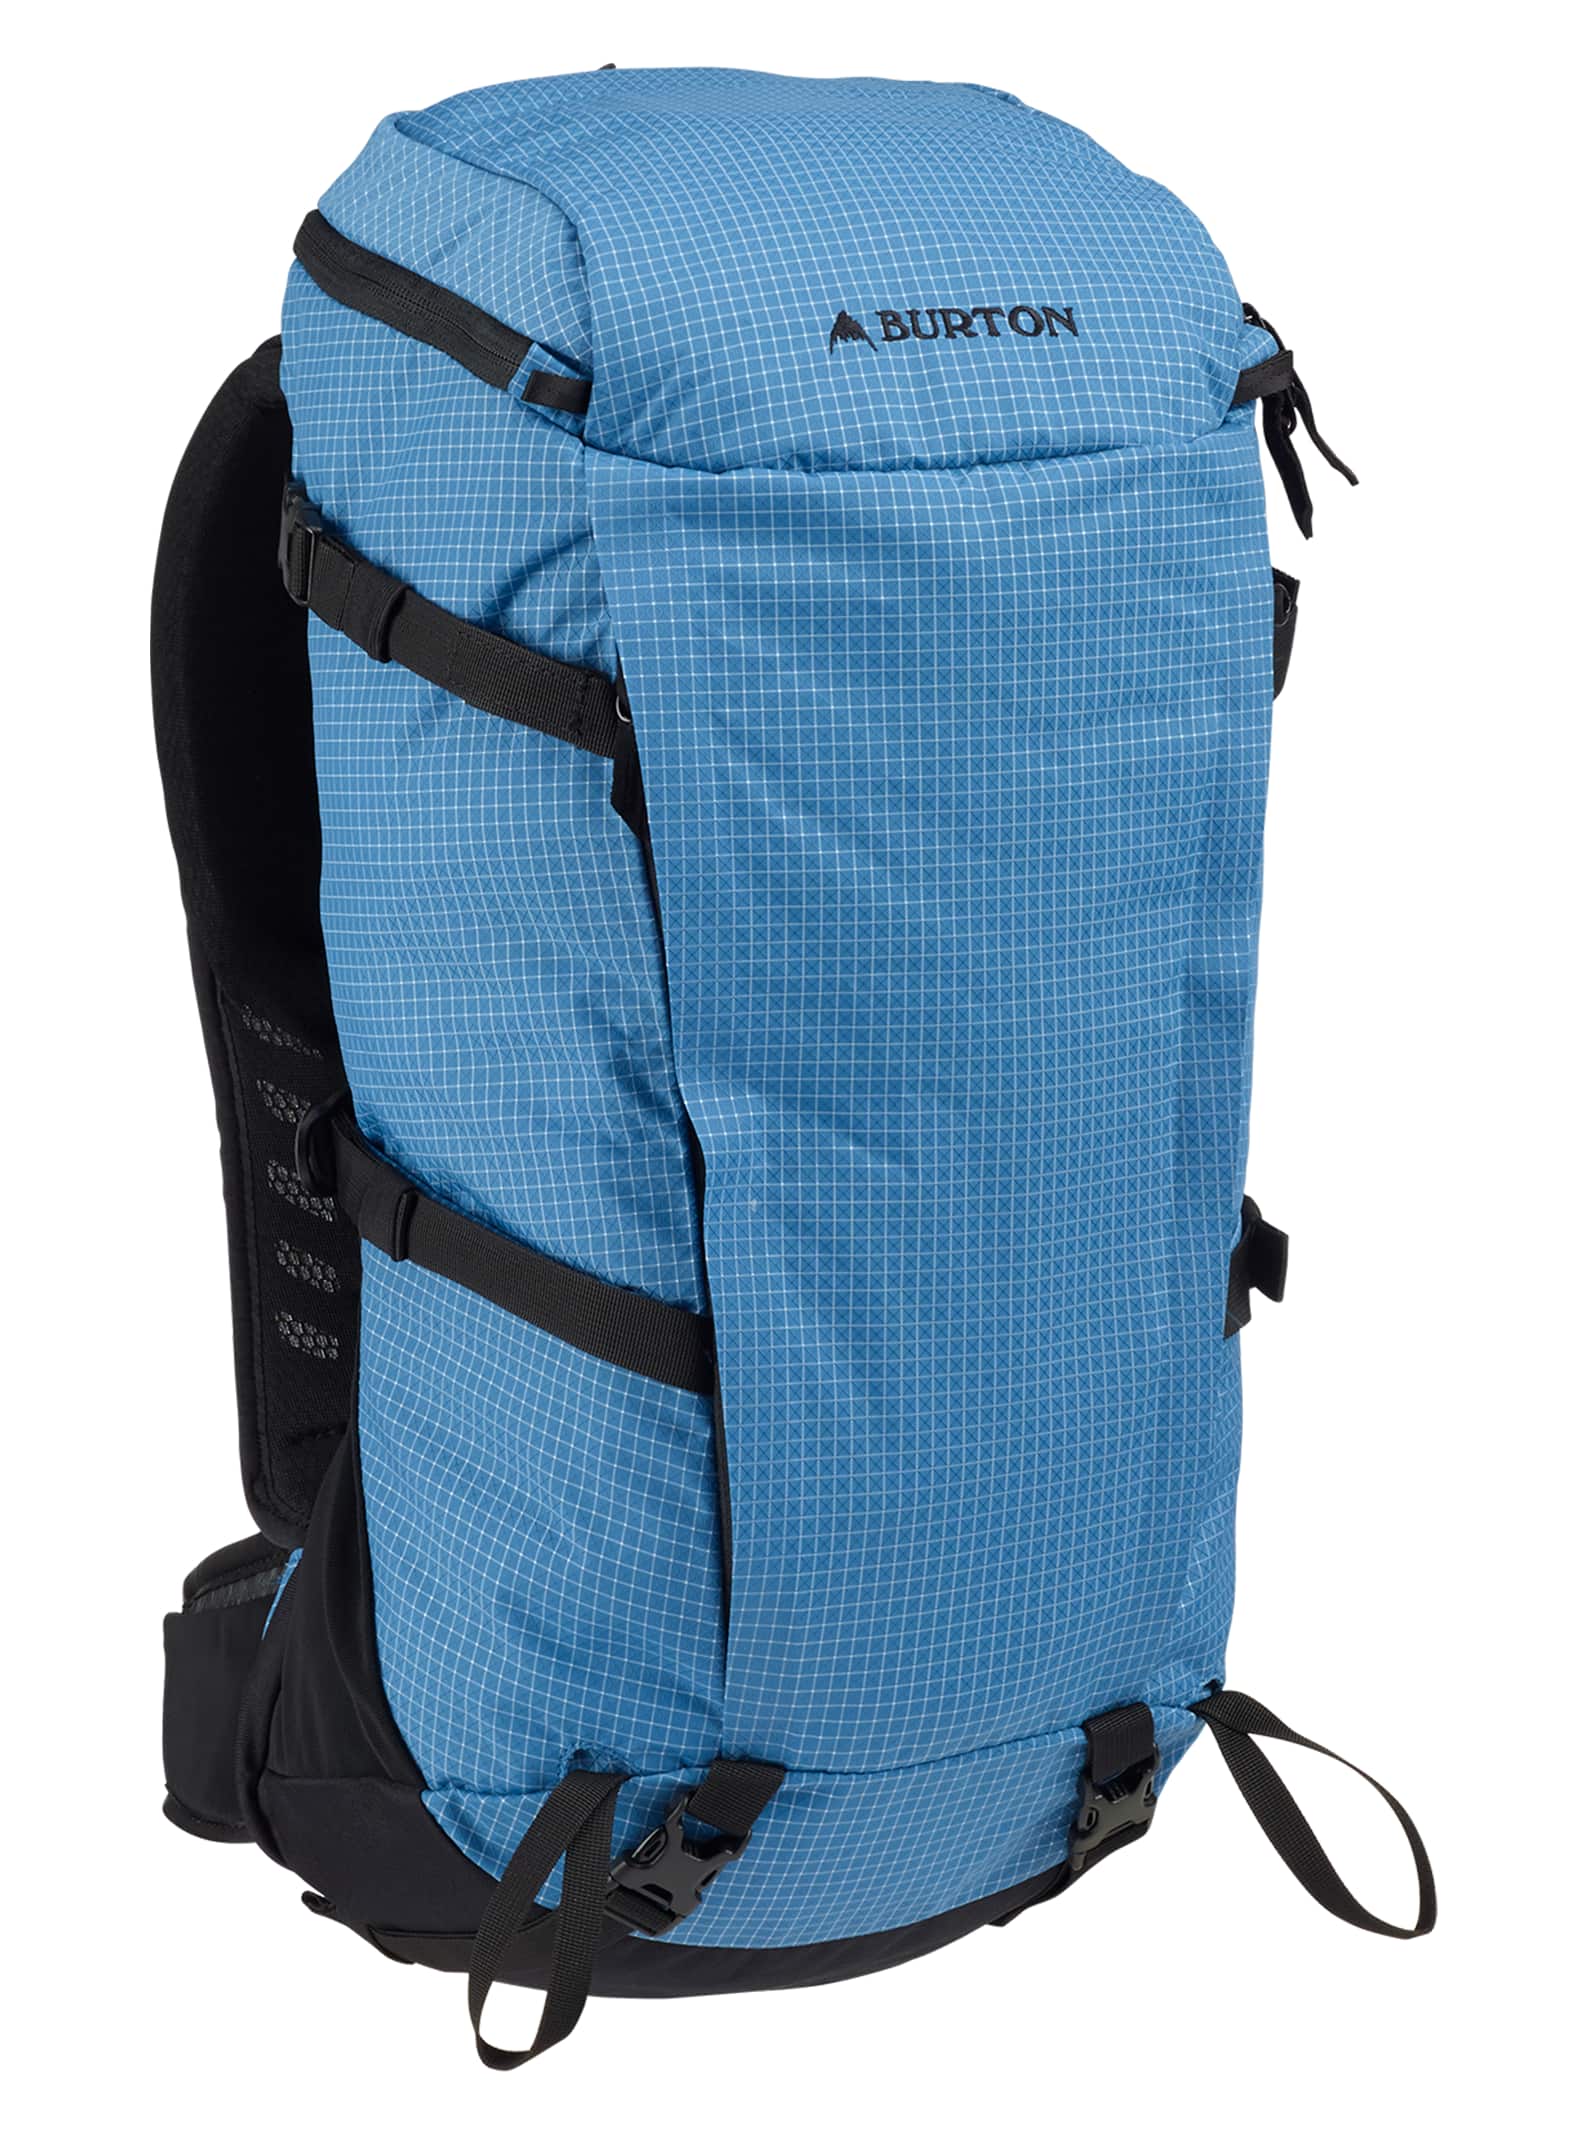 Burton Skyward 25L Backpack | Burton.com Fall 2019 US